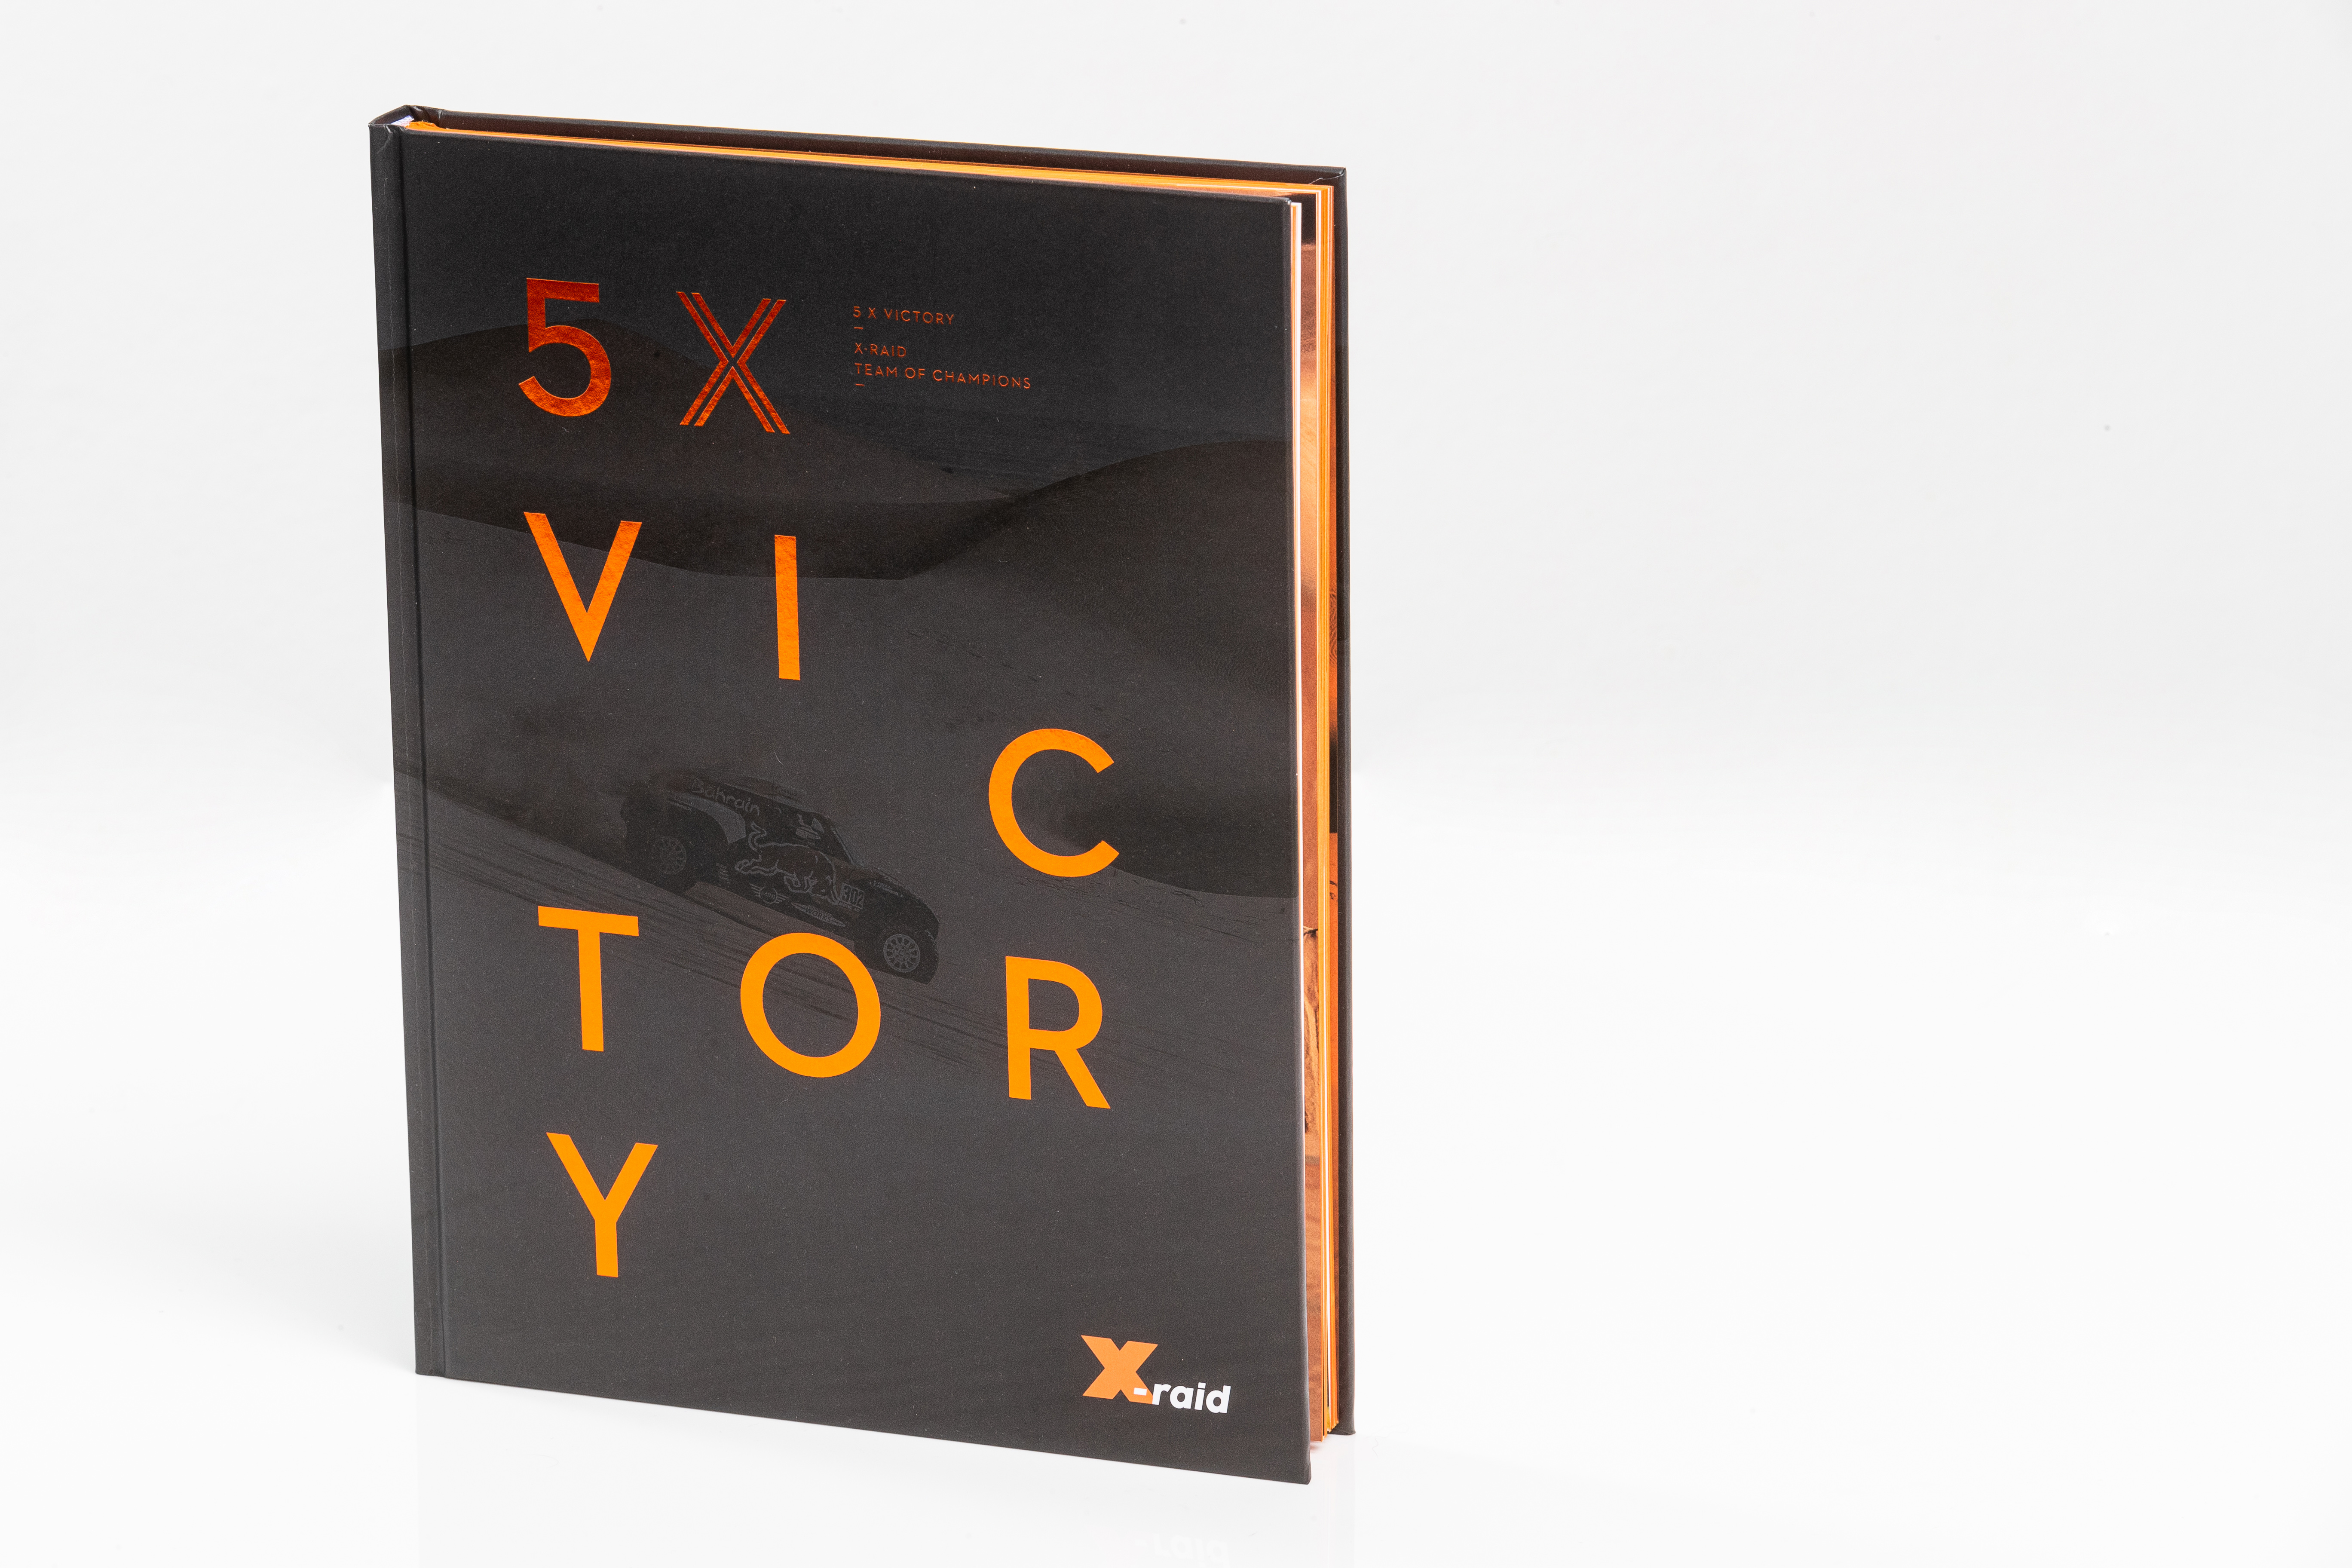 5x Victory X-raid - Team of Champions - Book